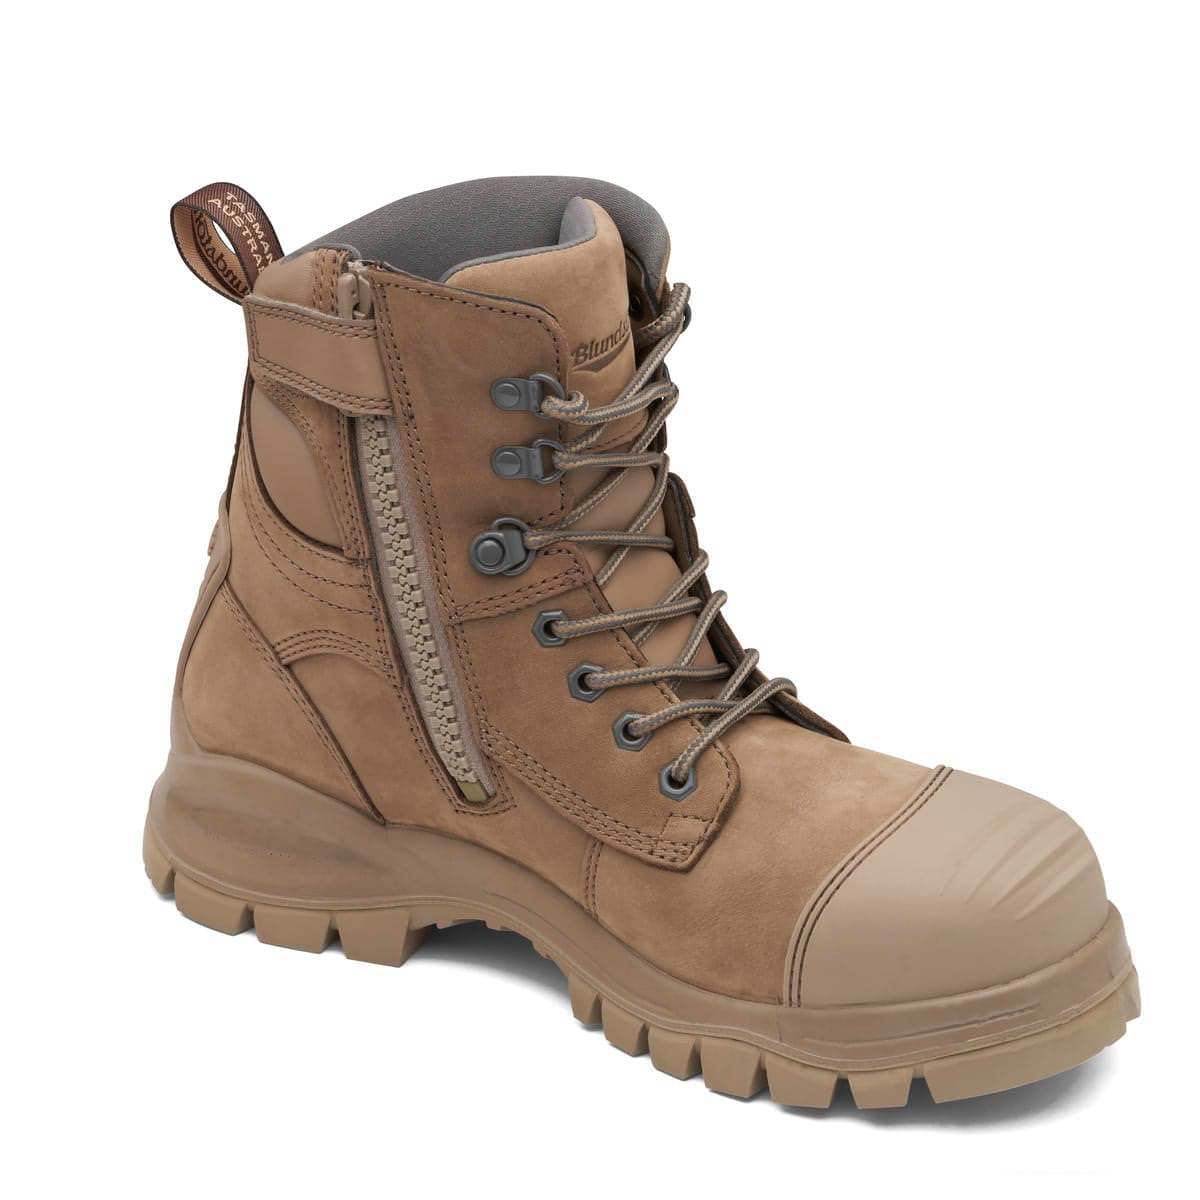 Blundstone Unisex Zip Up Series Safety Boots- Stone #984